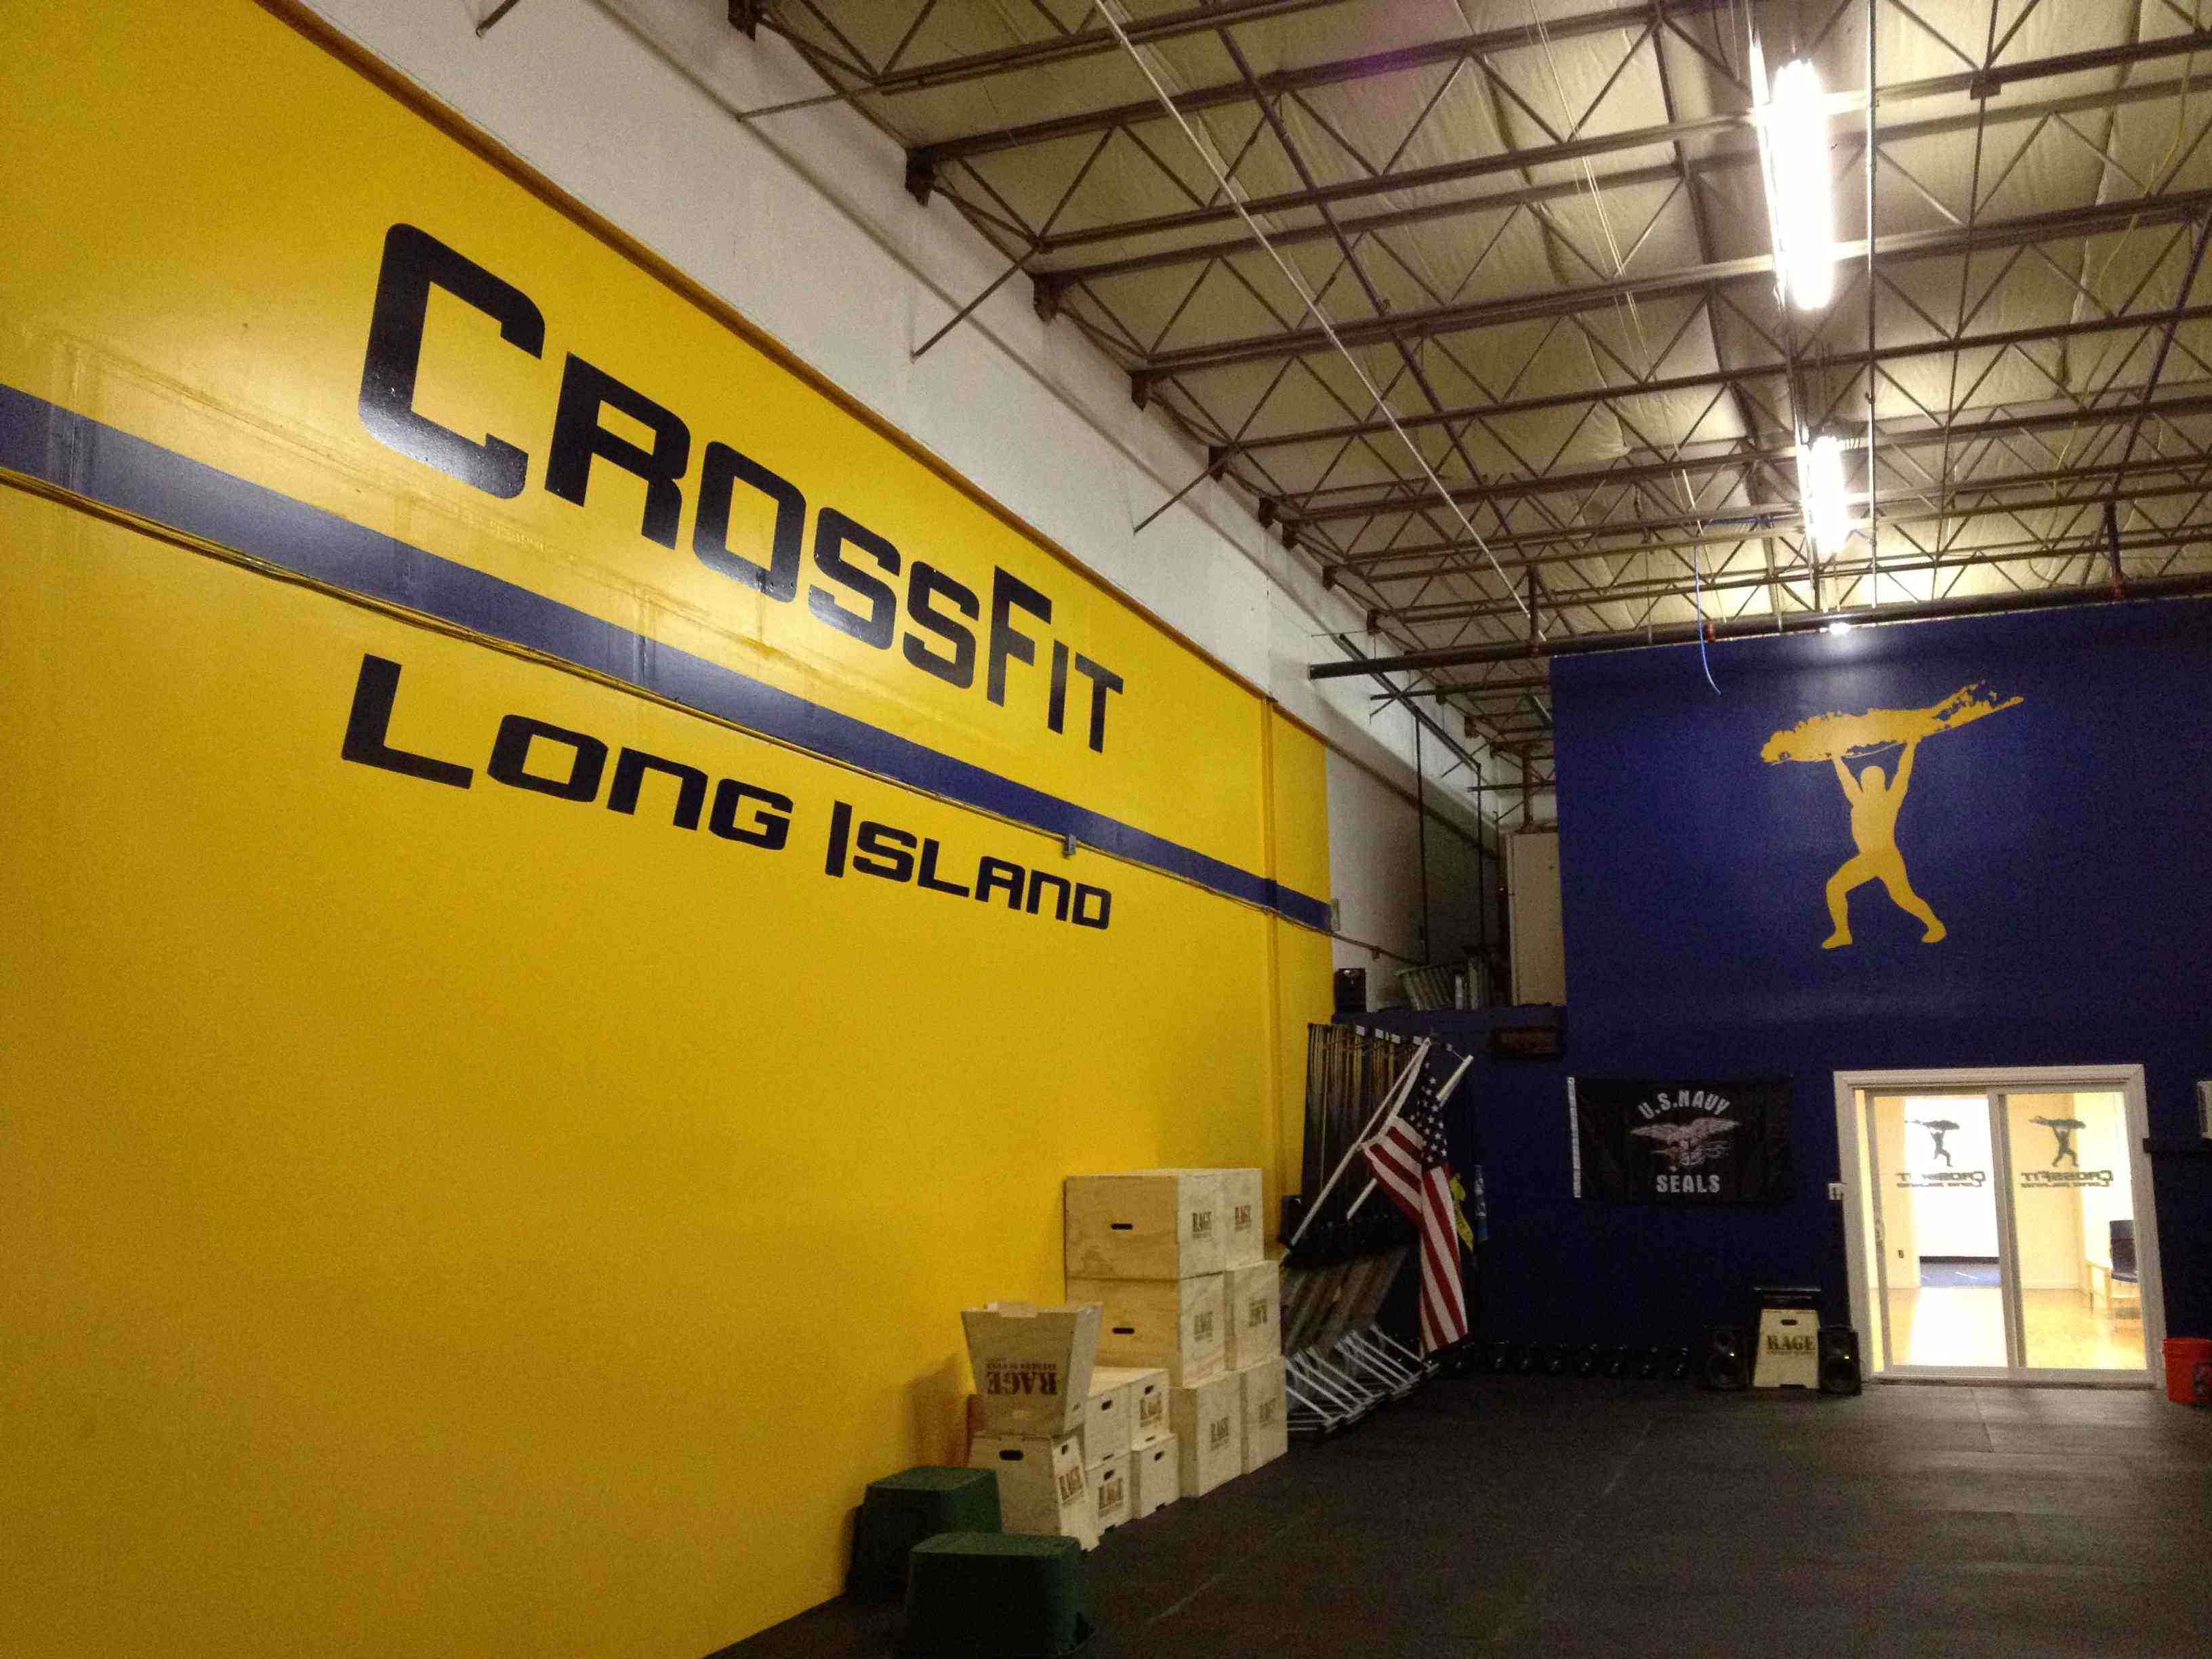 CrossFit Long Island Image